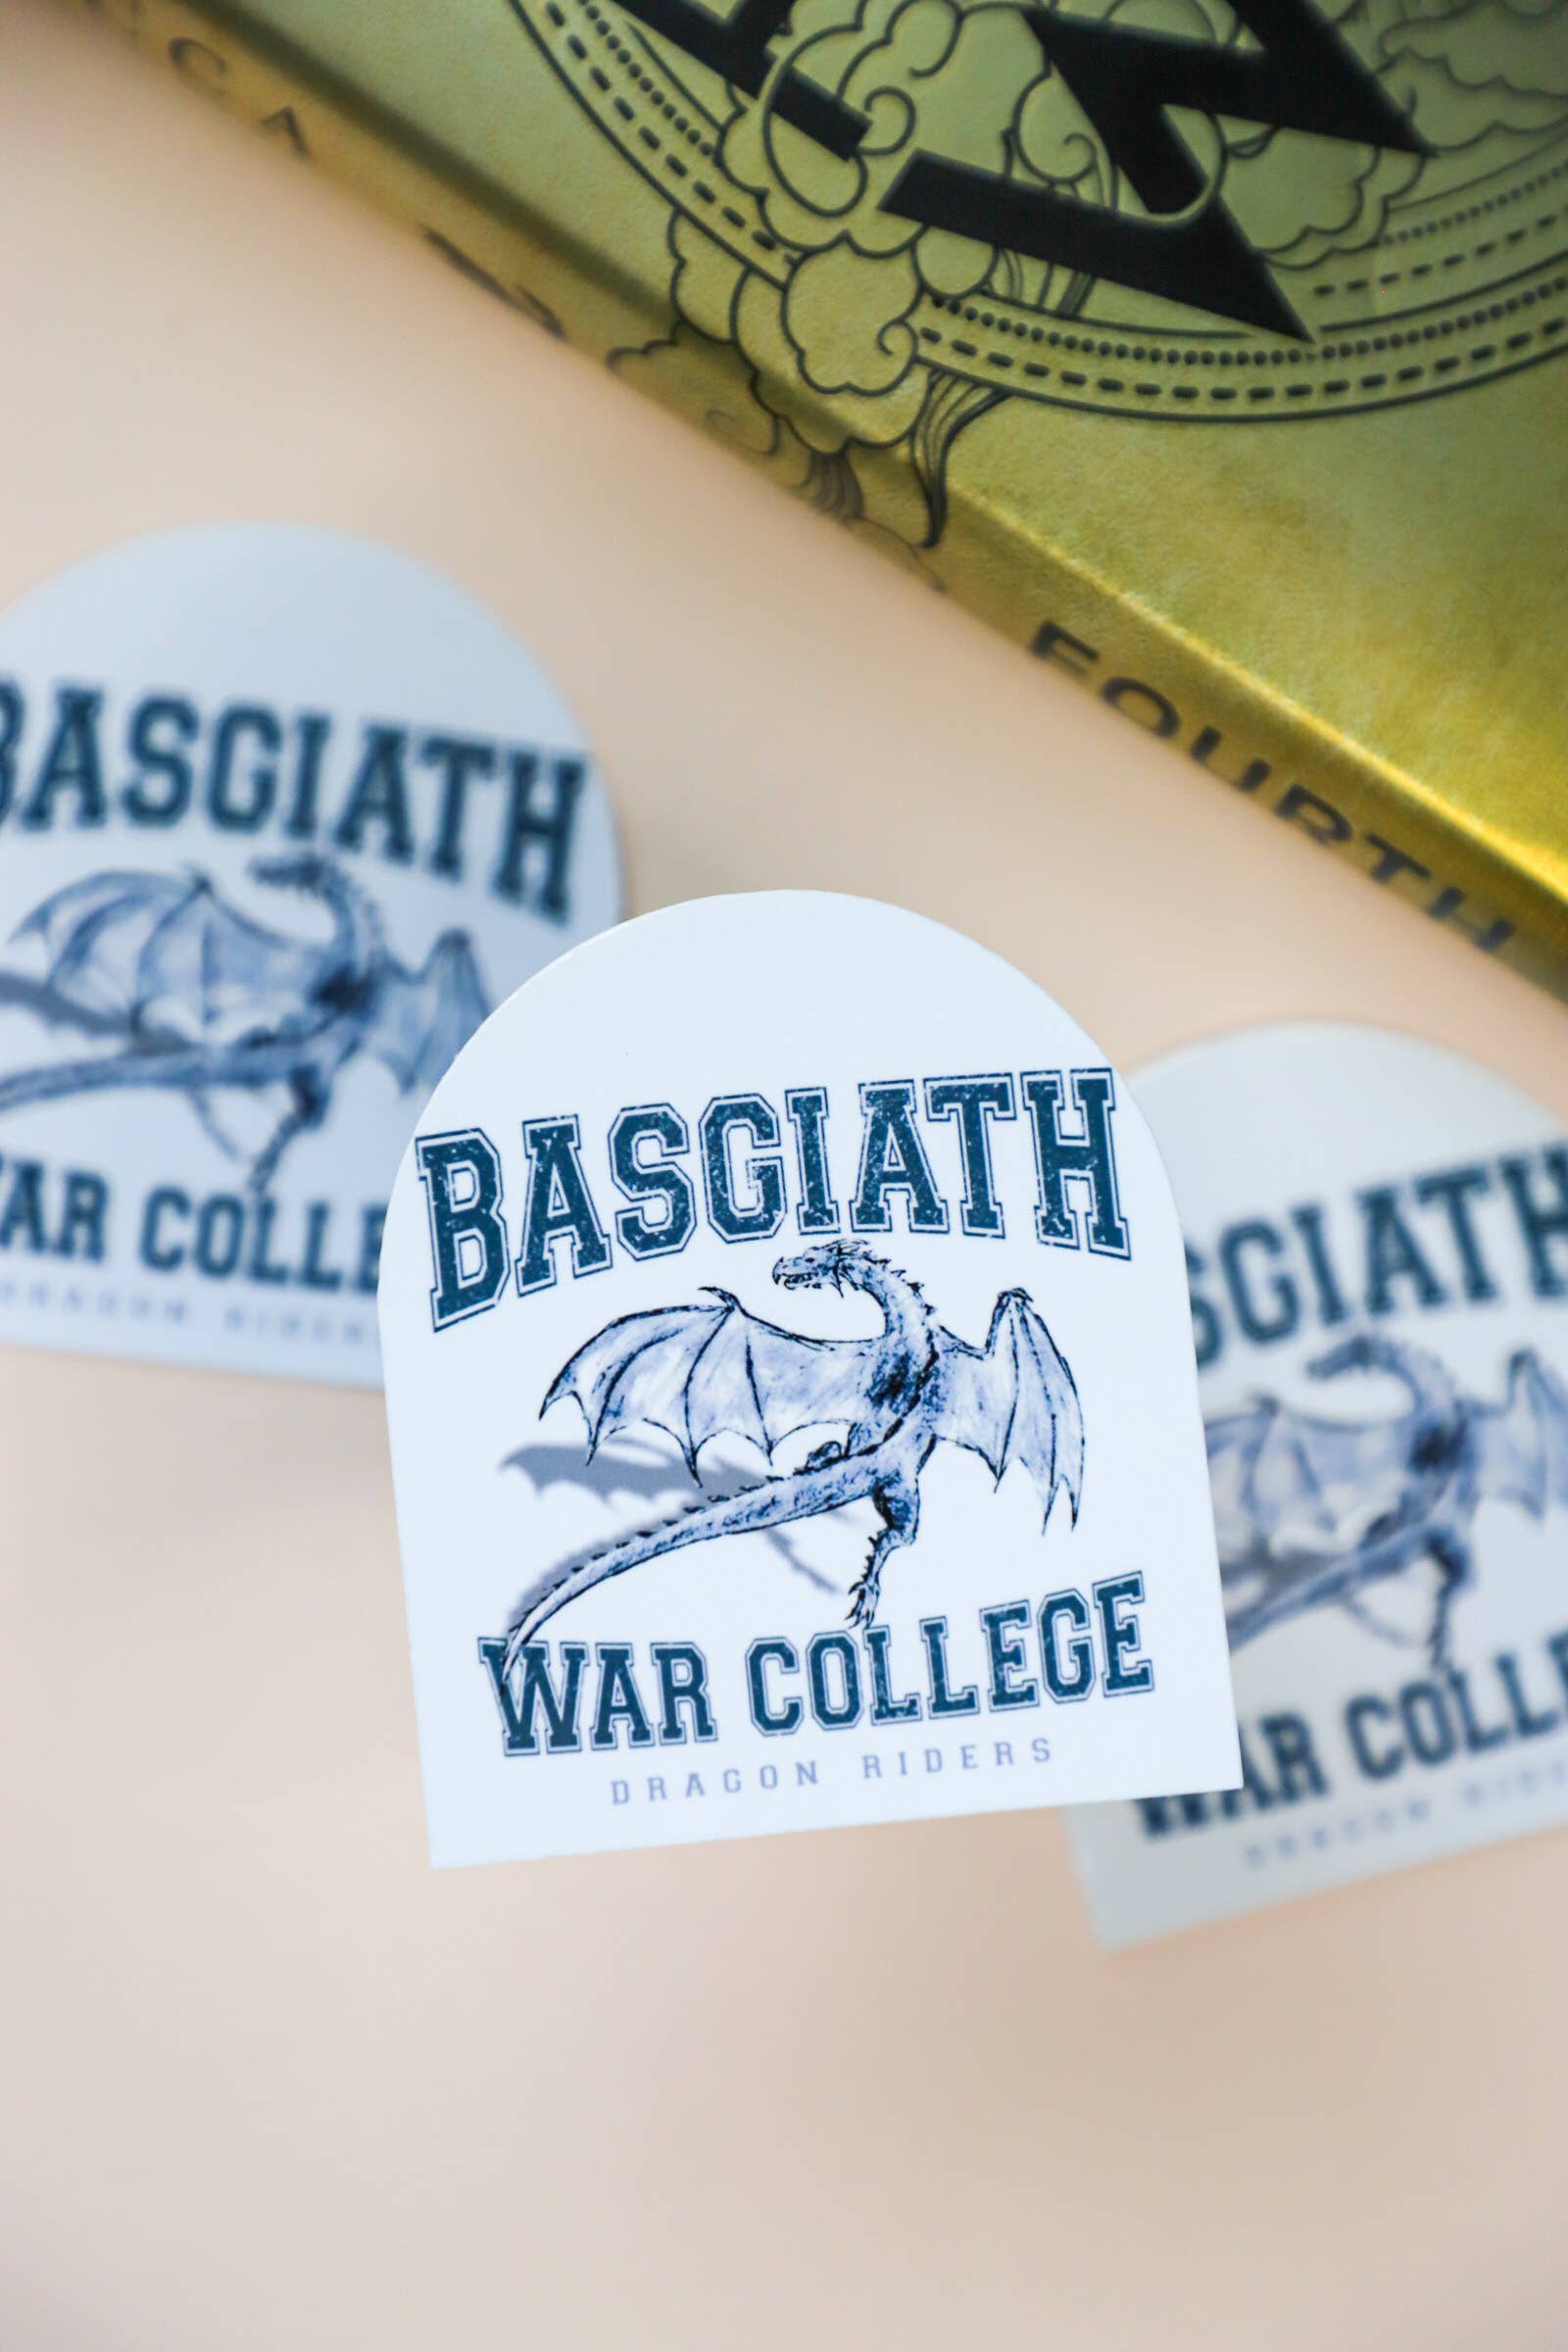 Basgiath War College Emblem Sticker